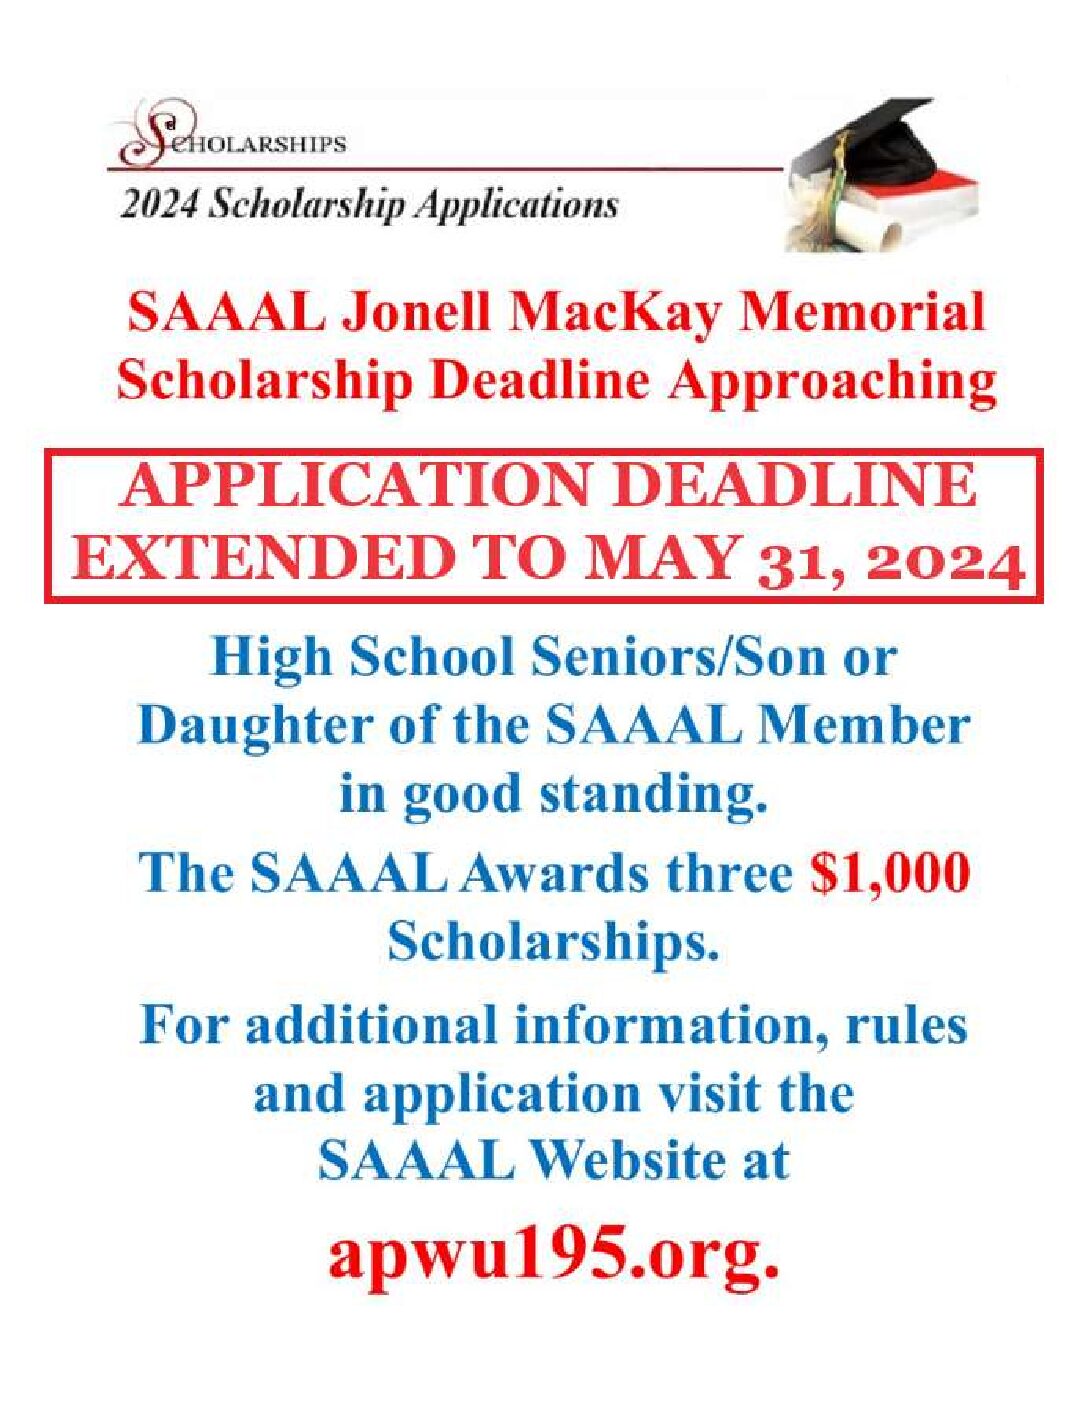 SAAAL Scholarship Deadline Extended - 